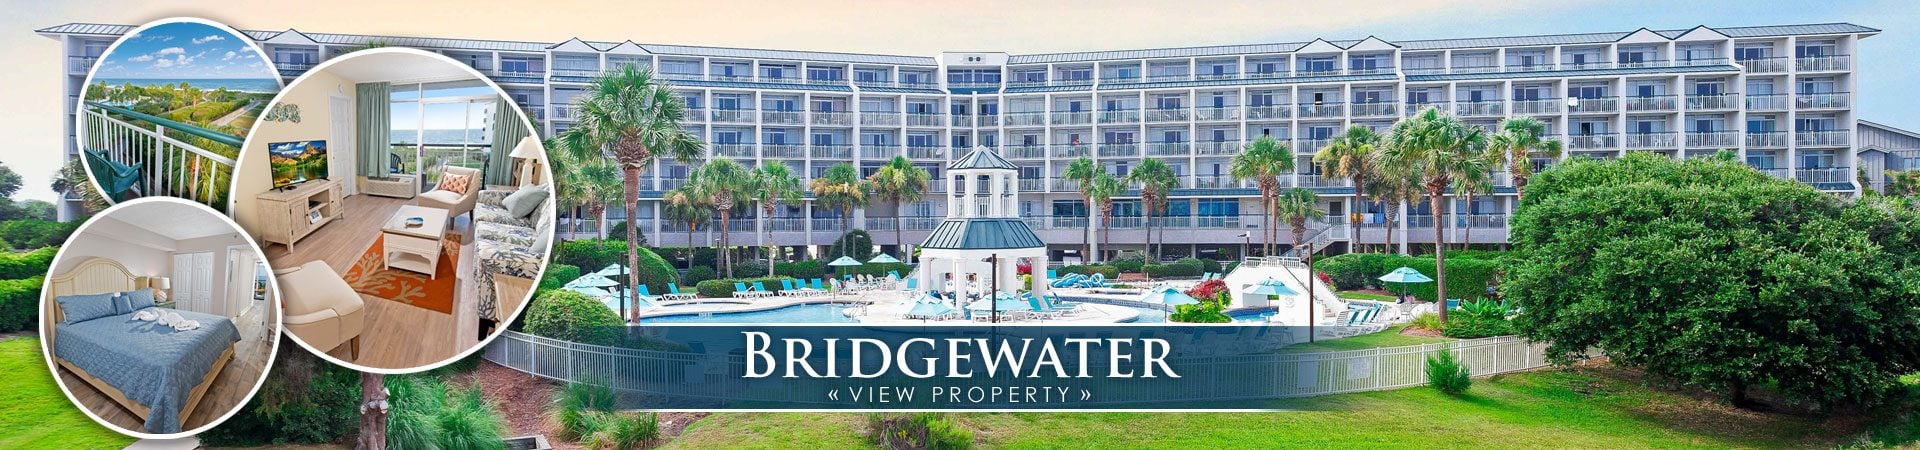 Bridgewater View Property 1920x450 1 